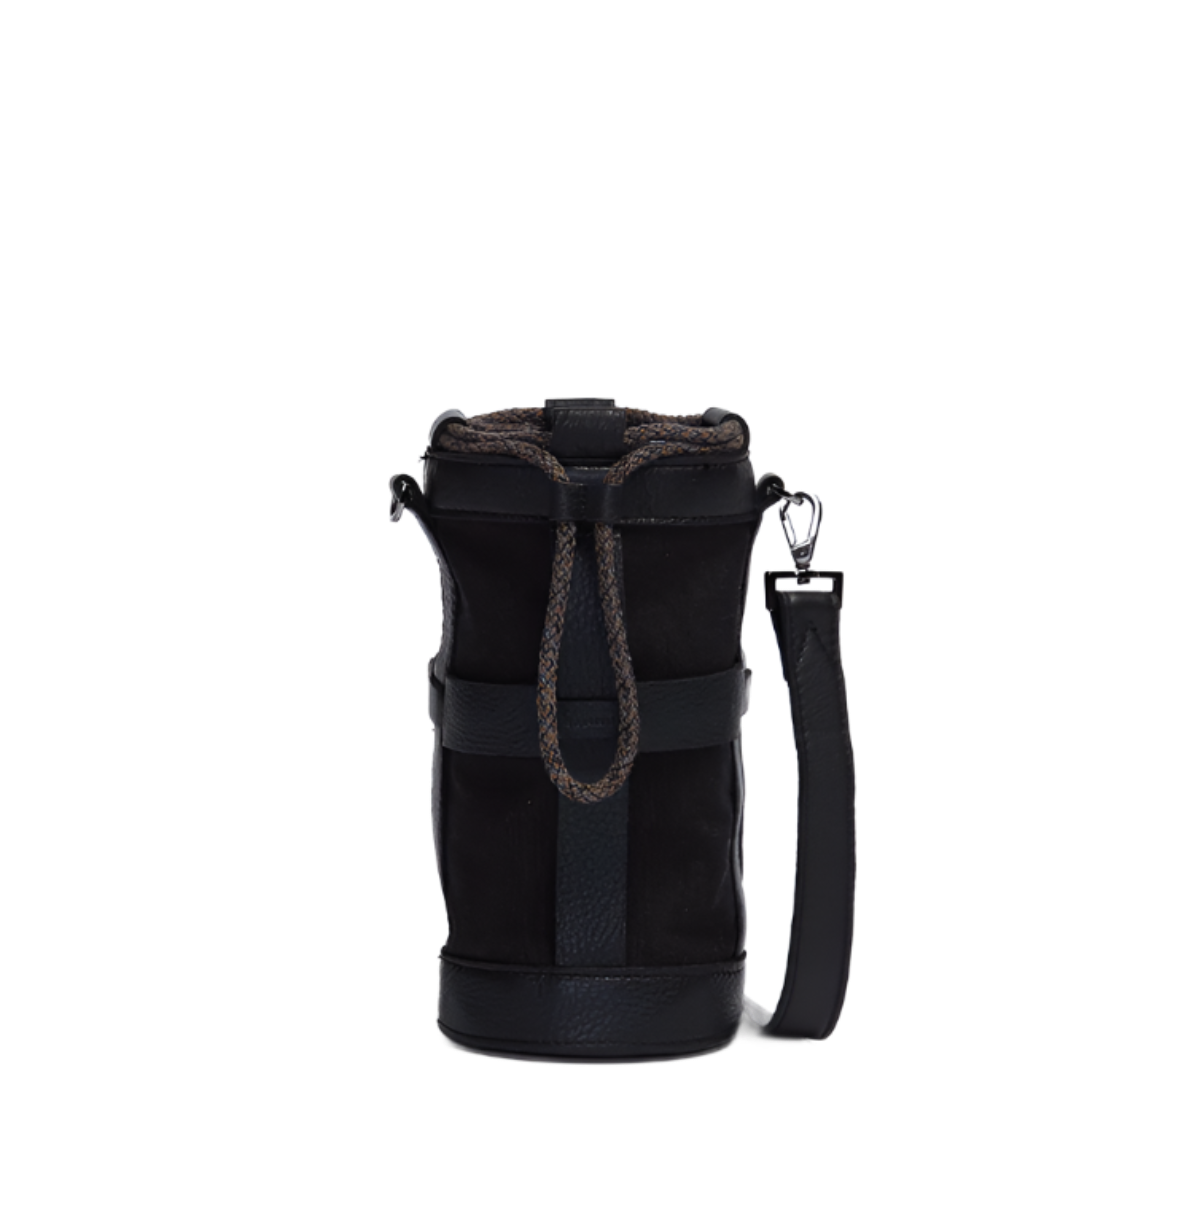 RUNYON Bucket Bag in Black